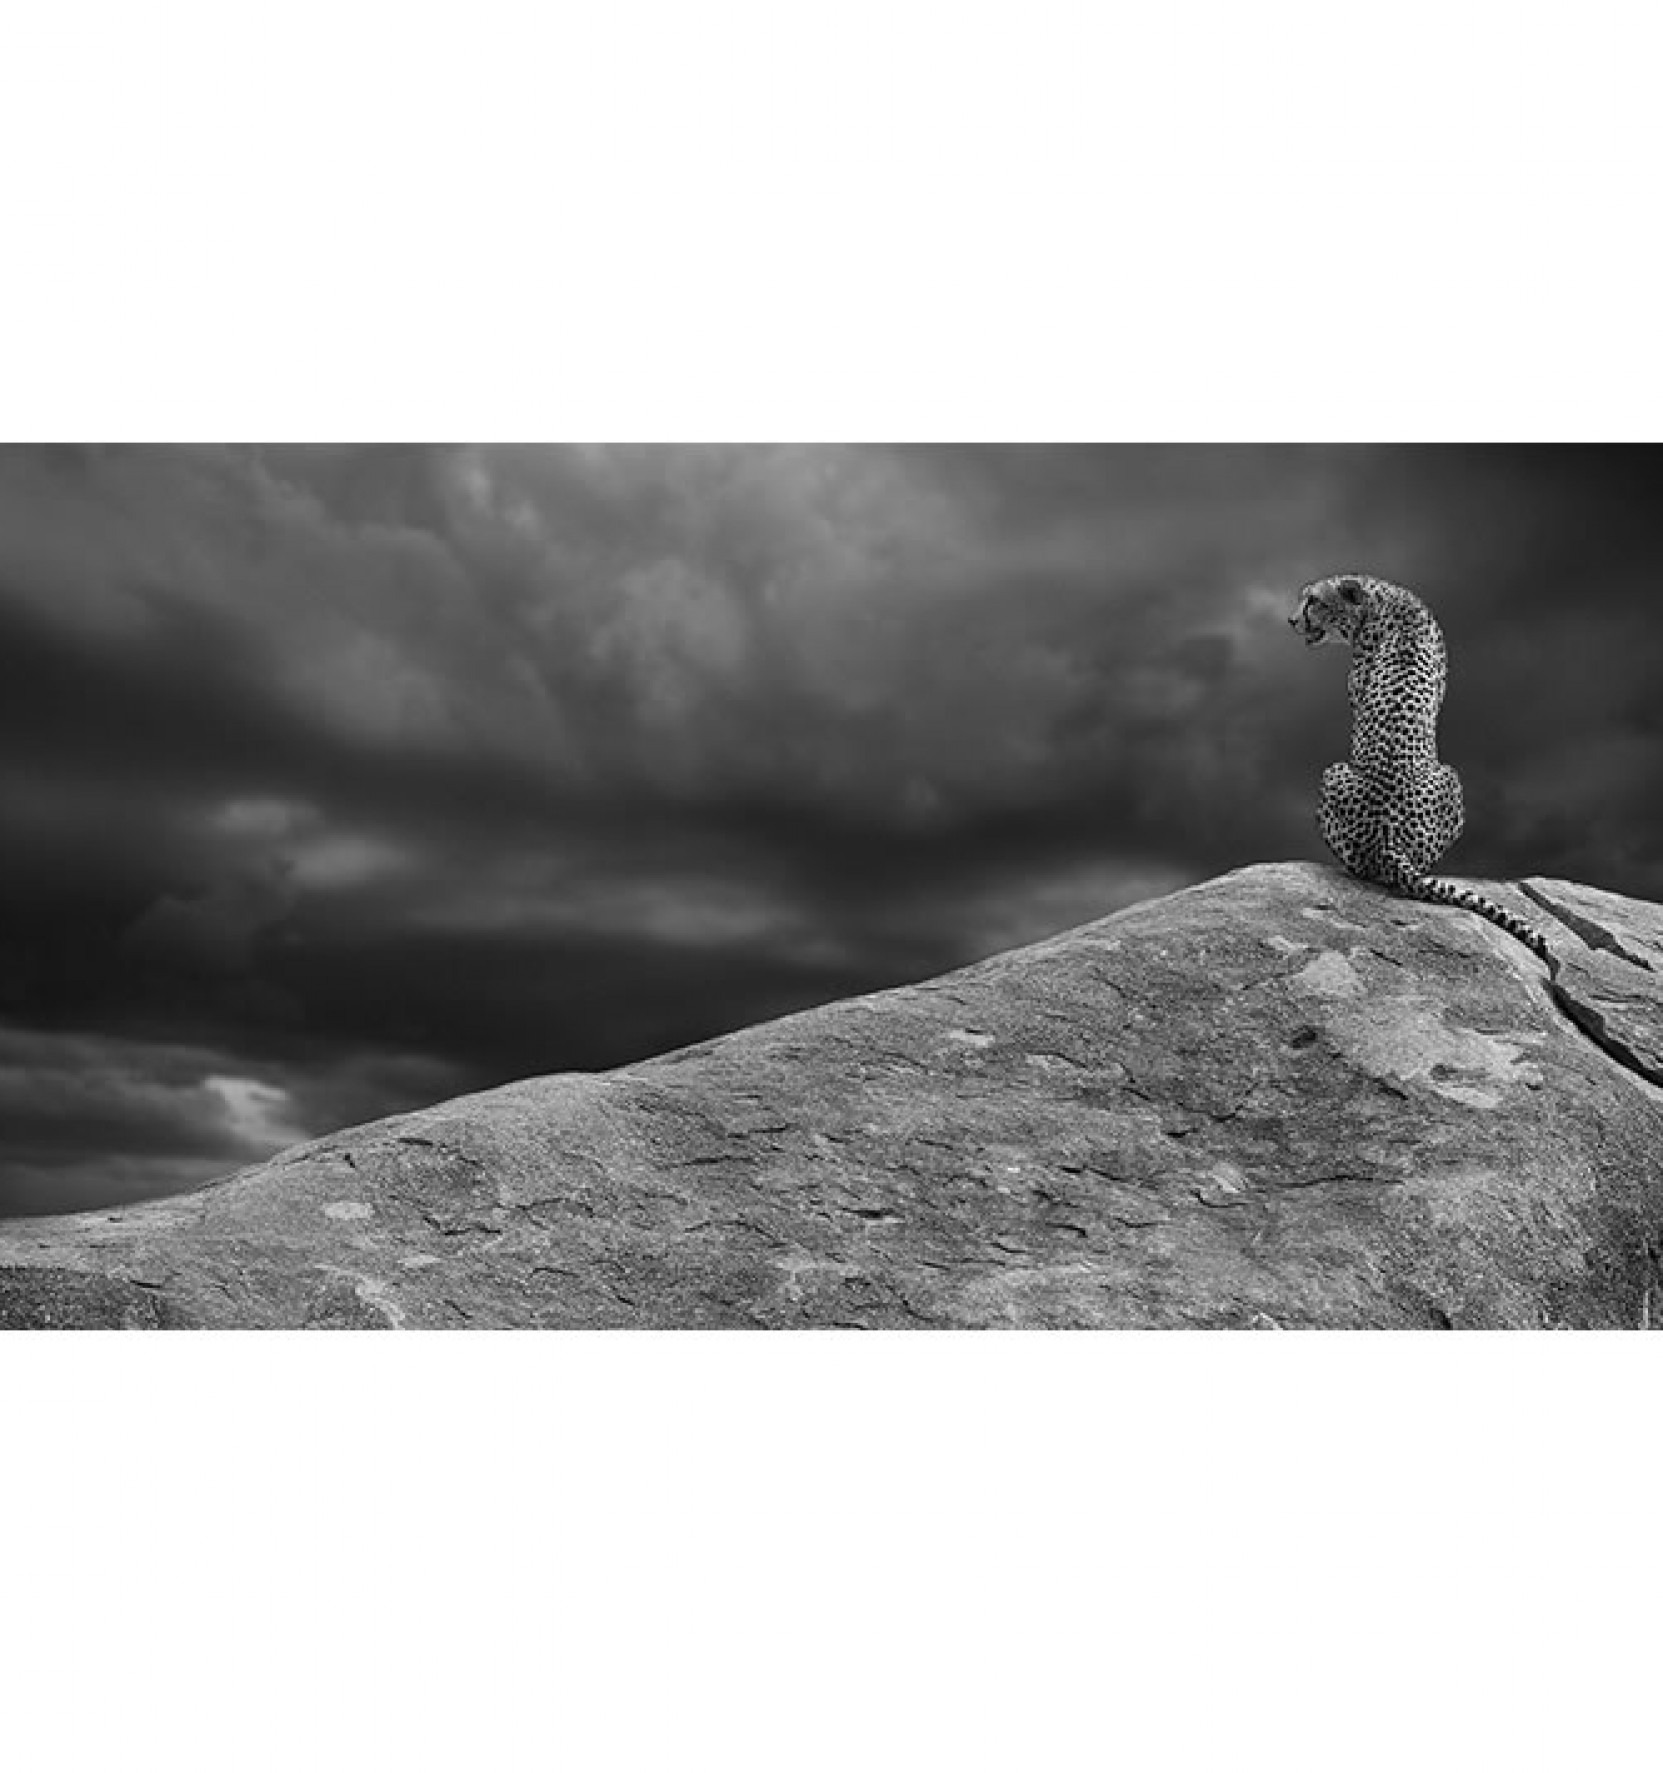 Cheetah On The Rocks by Mario Moreno